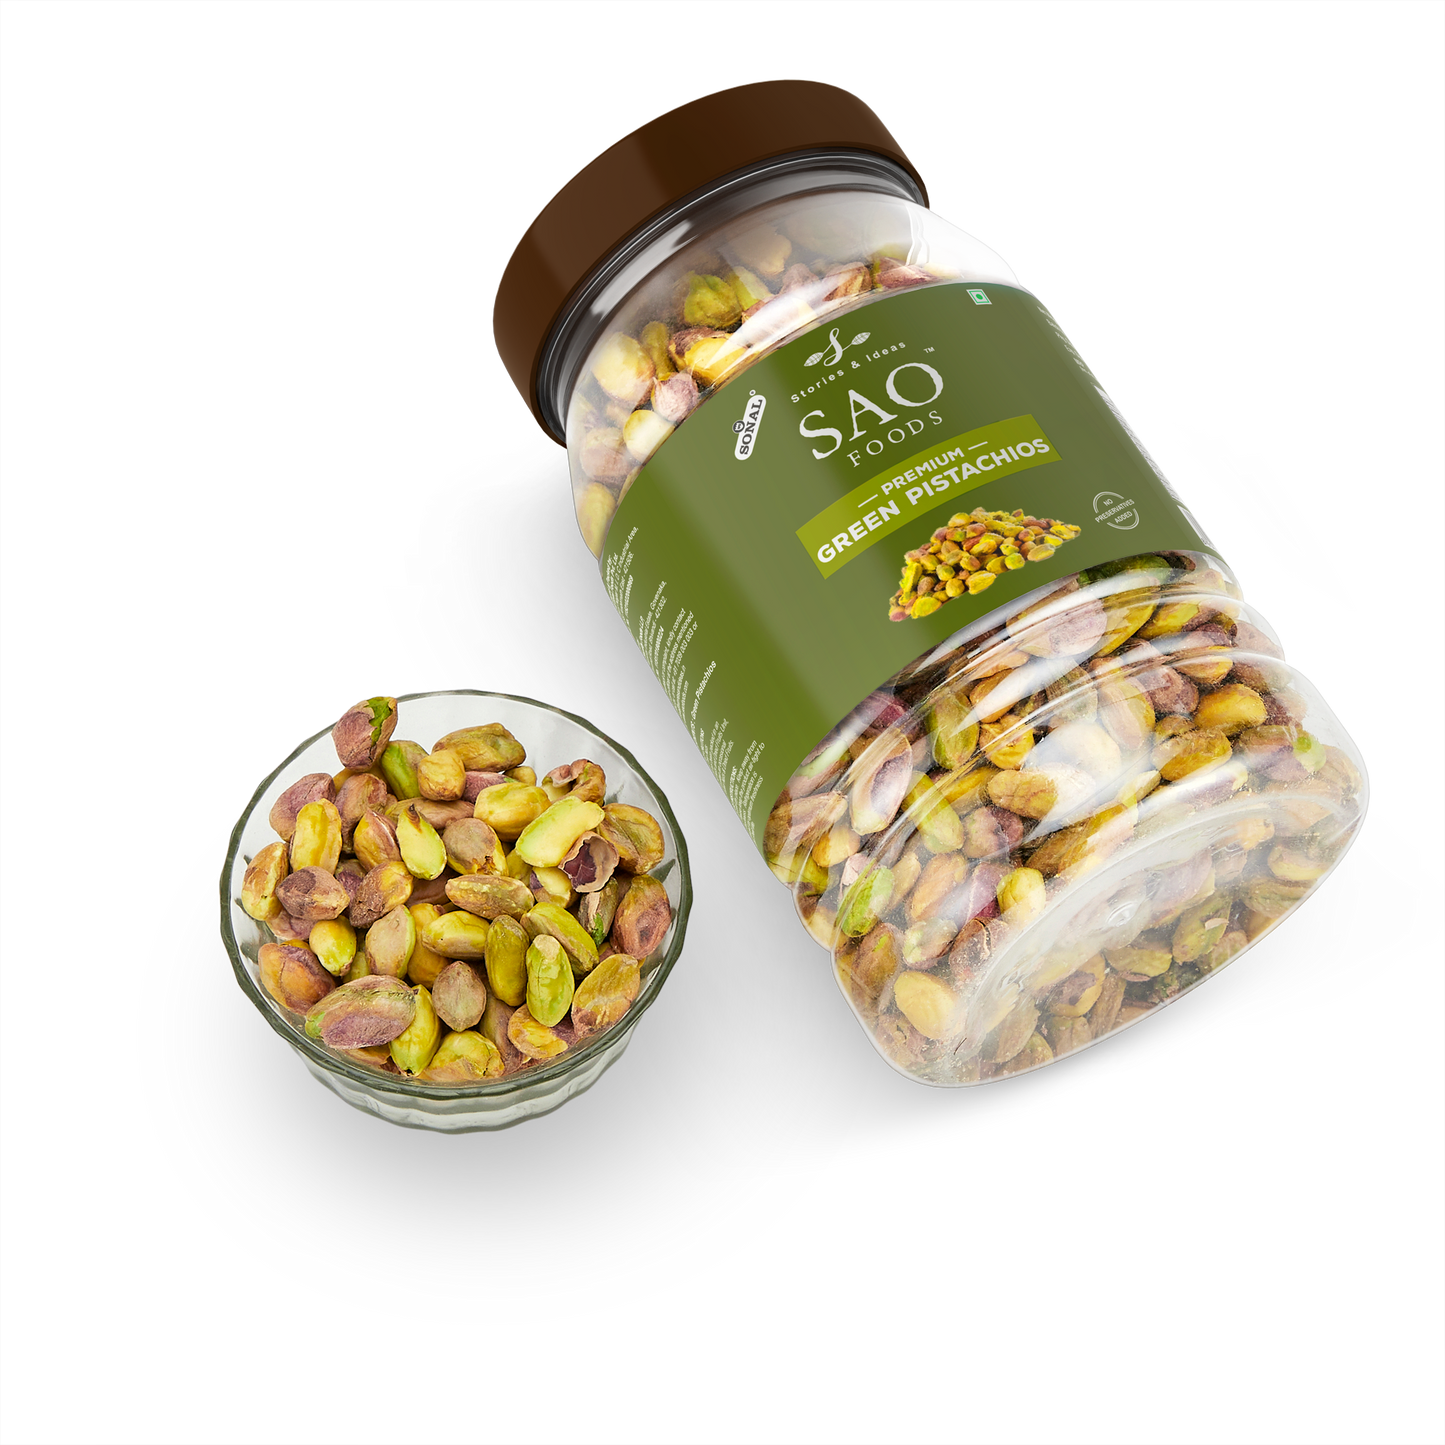 SAO Foods Premium Green Pistachios 500 gm